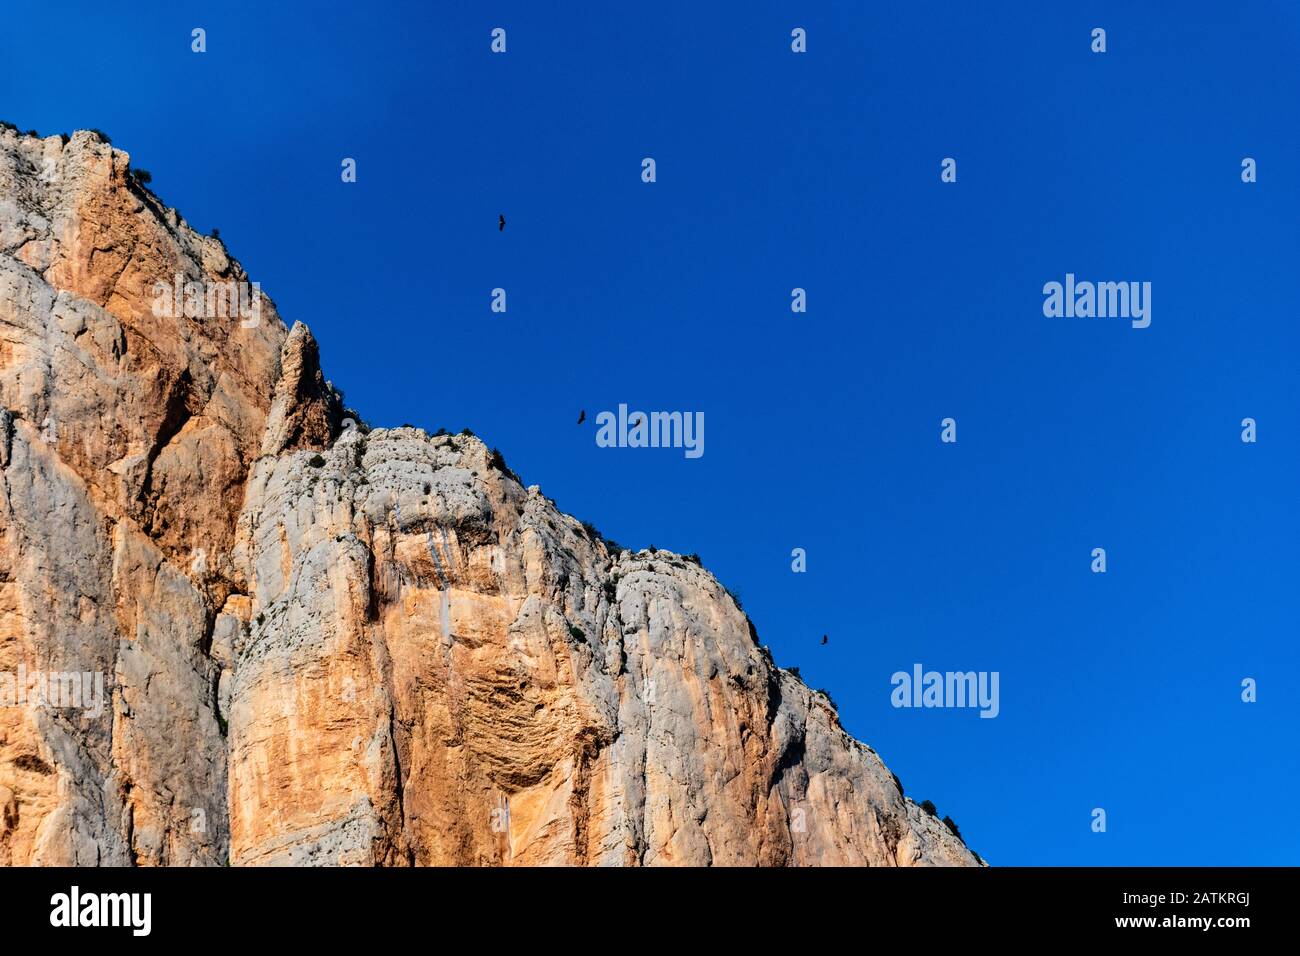 Predator birds flying over the rocky mountains of Congost de Mont-rebei in Spain Stock Photo